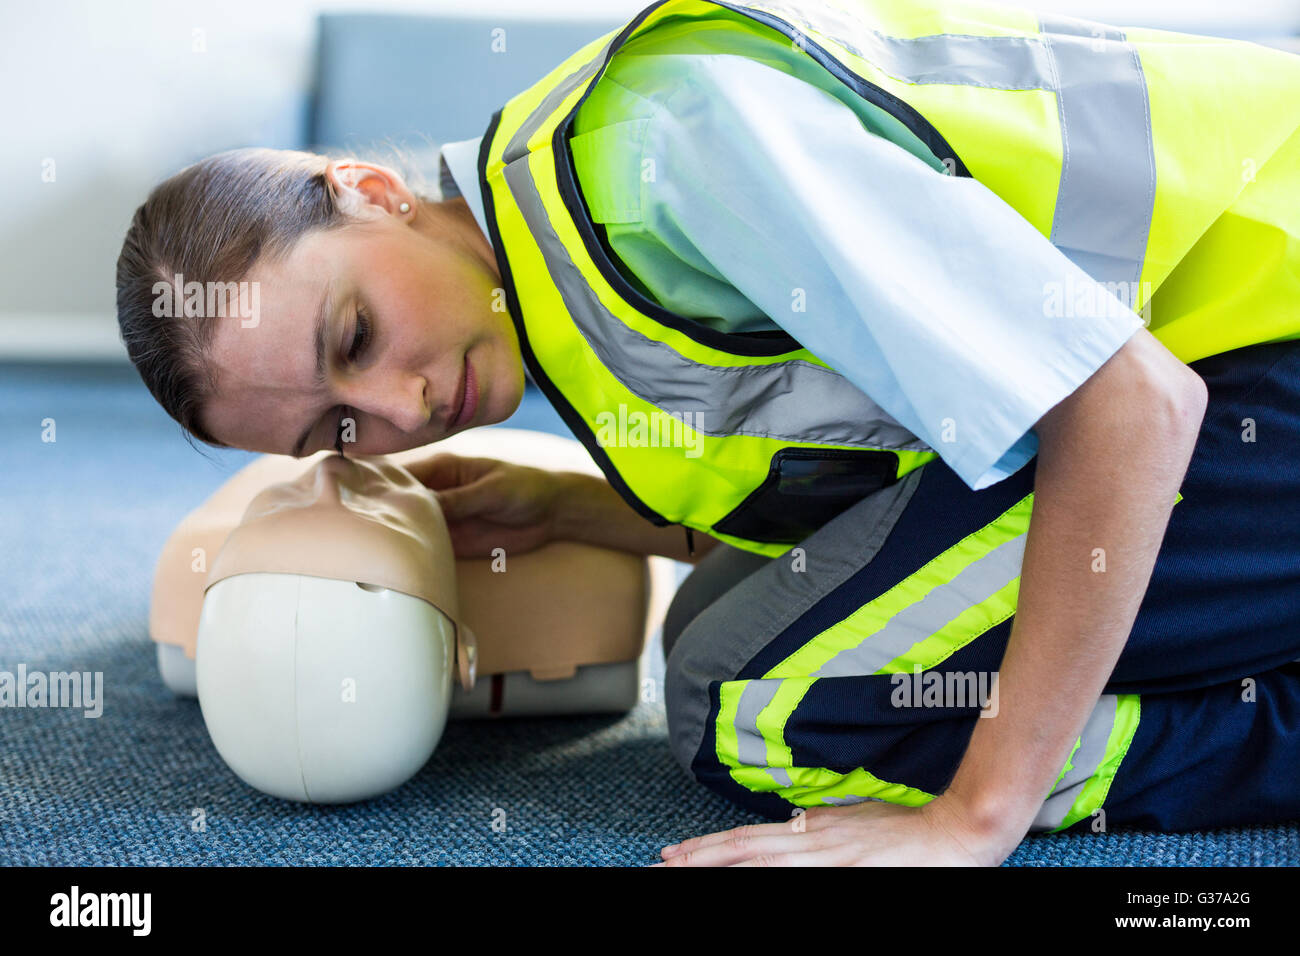 Female paramedic during cardiopulmonary resuscitation training Stock Photo